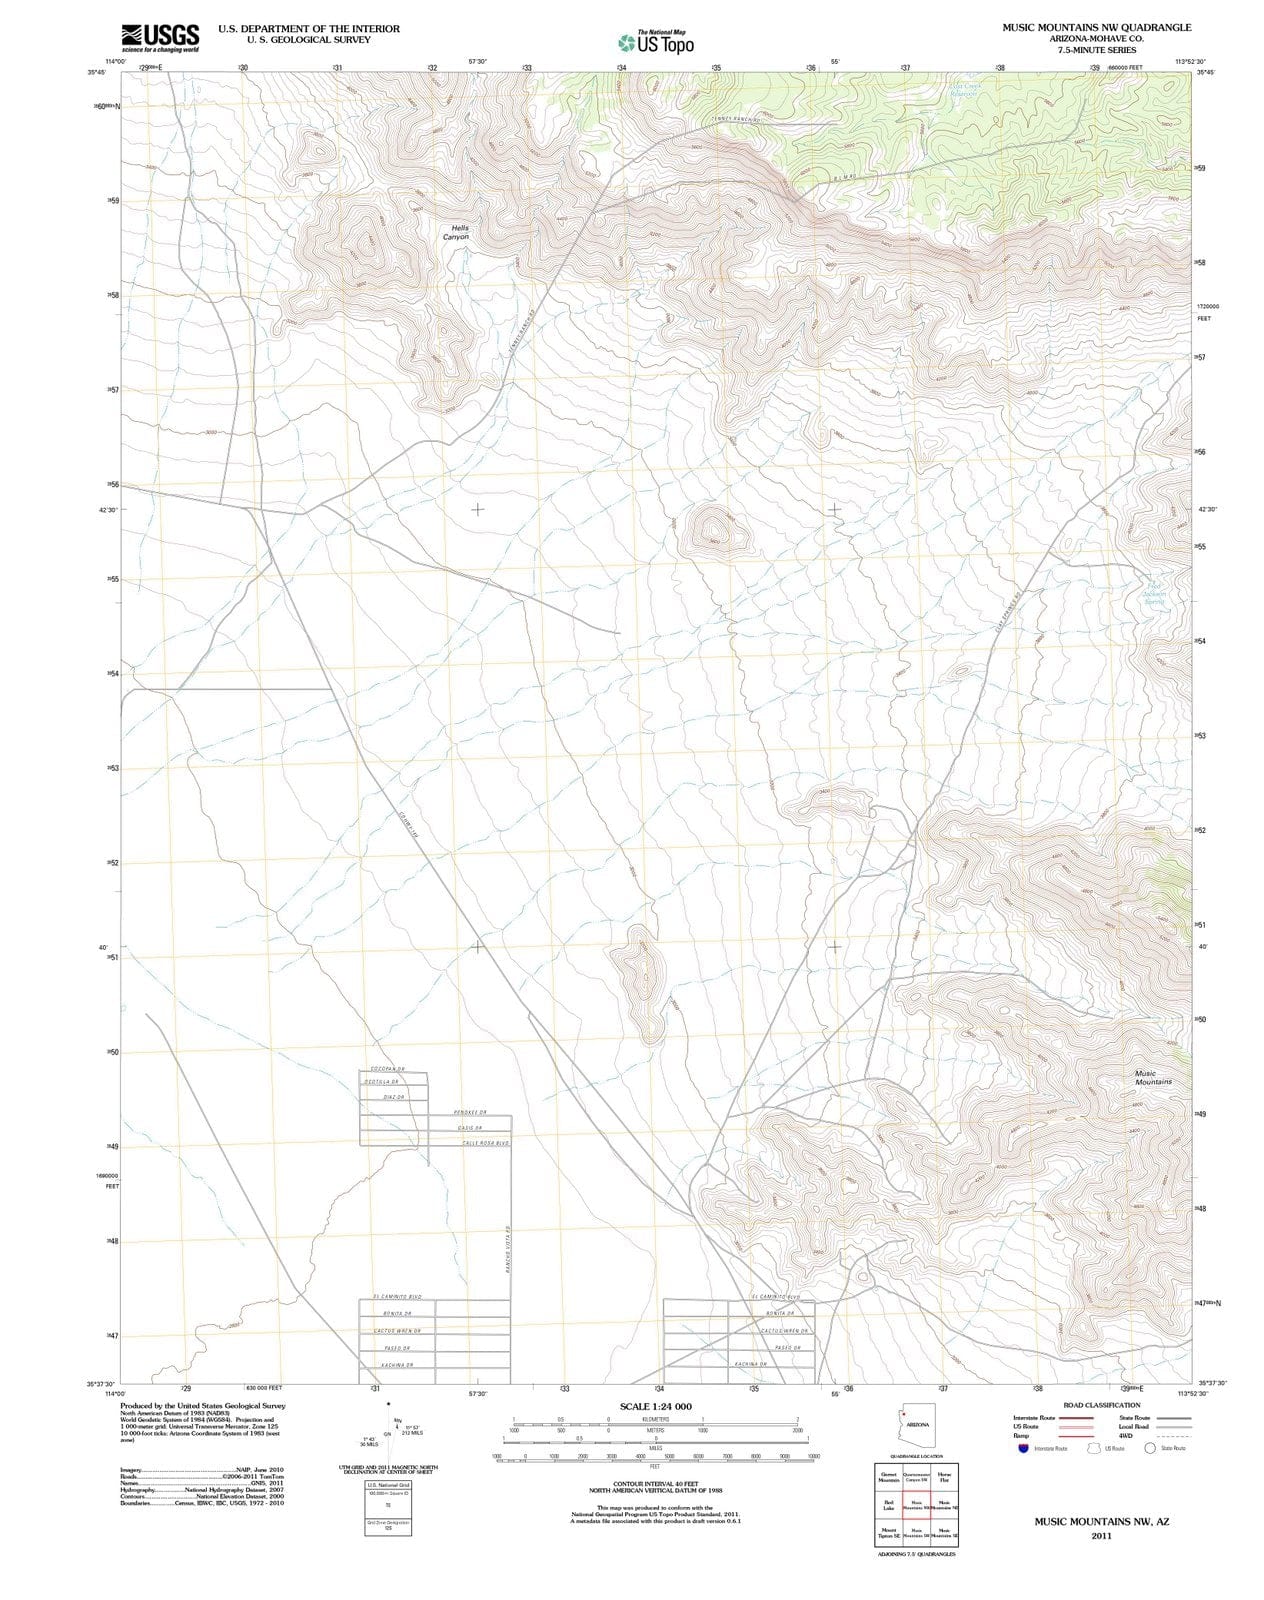 2011 Music Mountains, AZ - Arizona - USGS Topographic Map v2